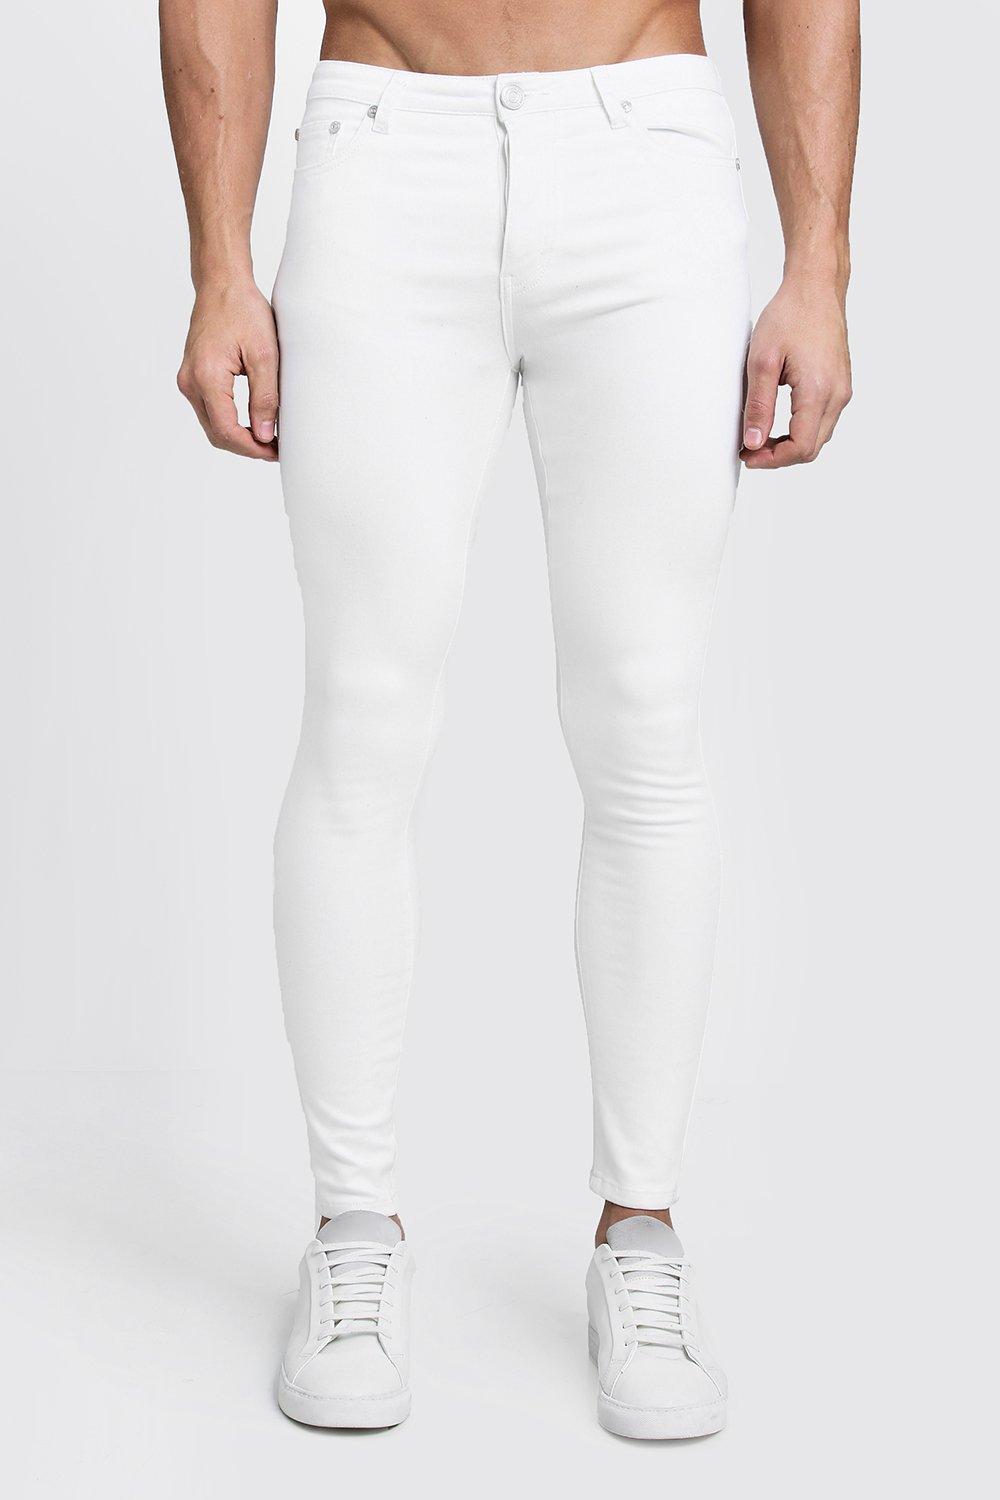 white jeans slim